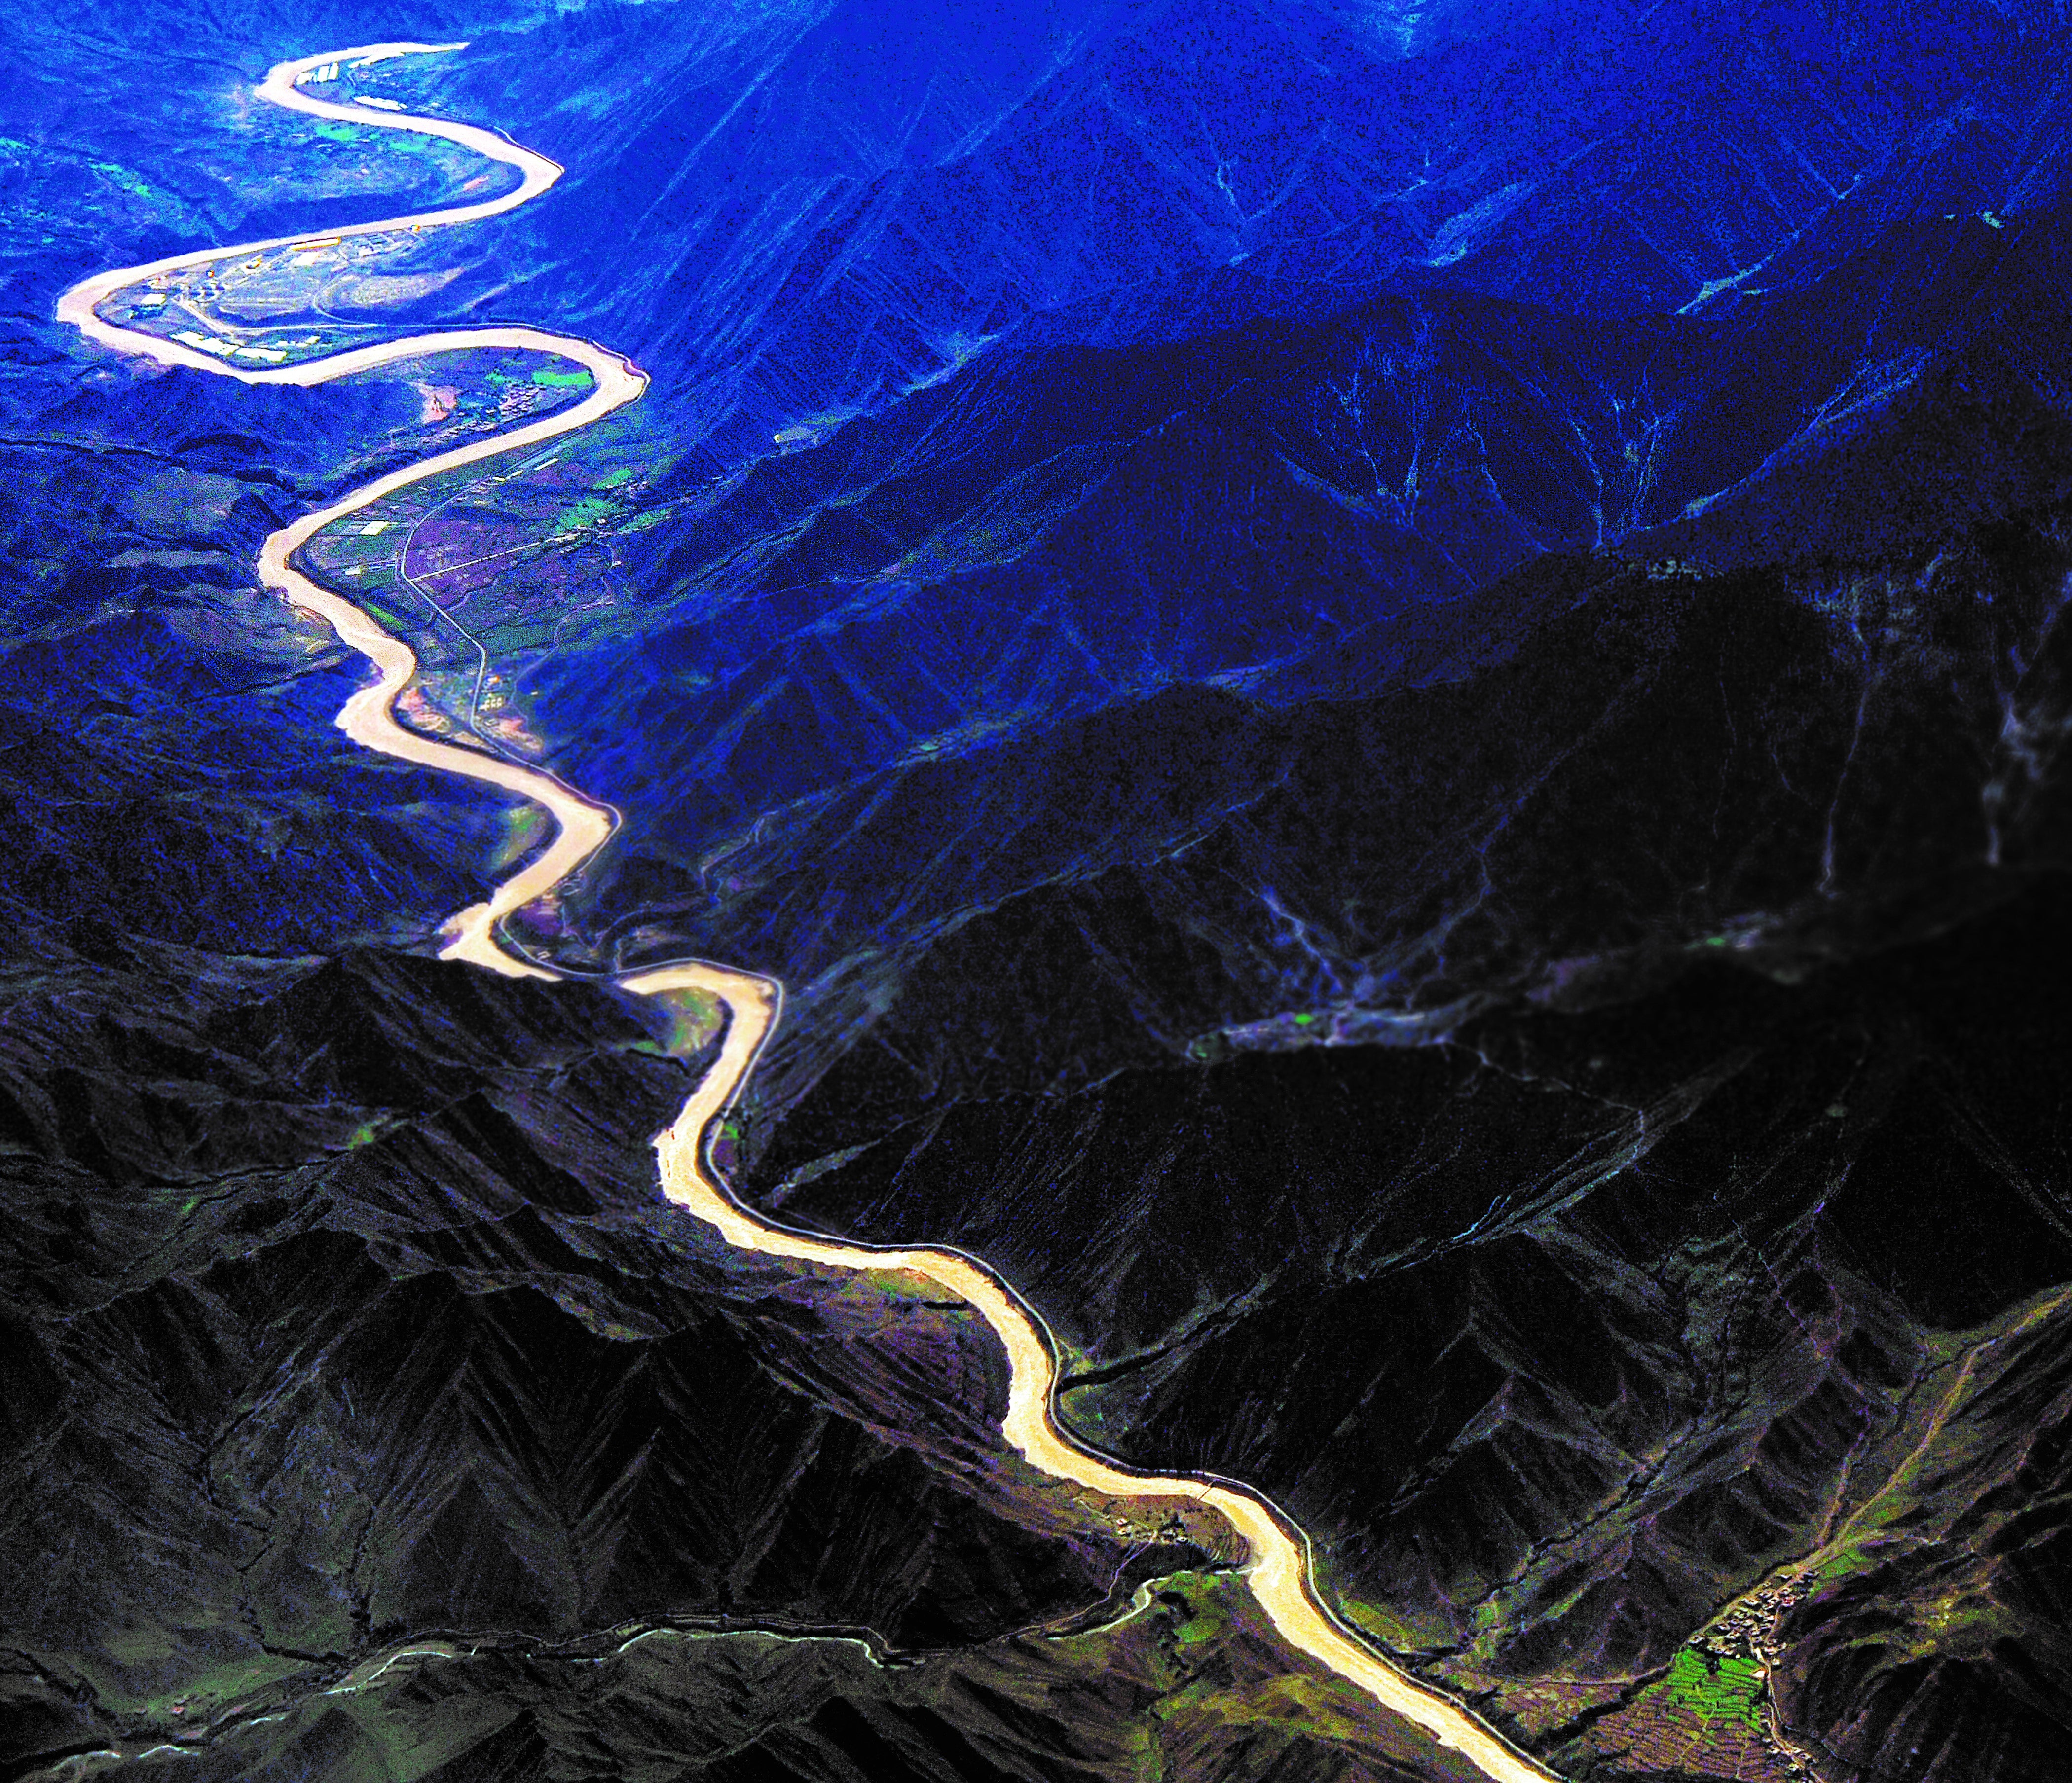 The Lancang River flows through mountainous areas in Yunnan province